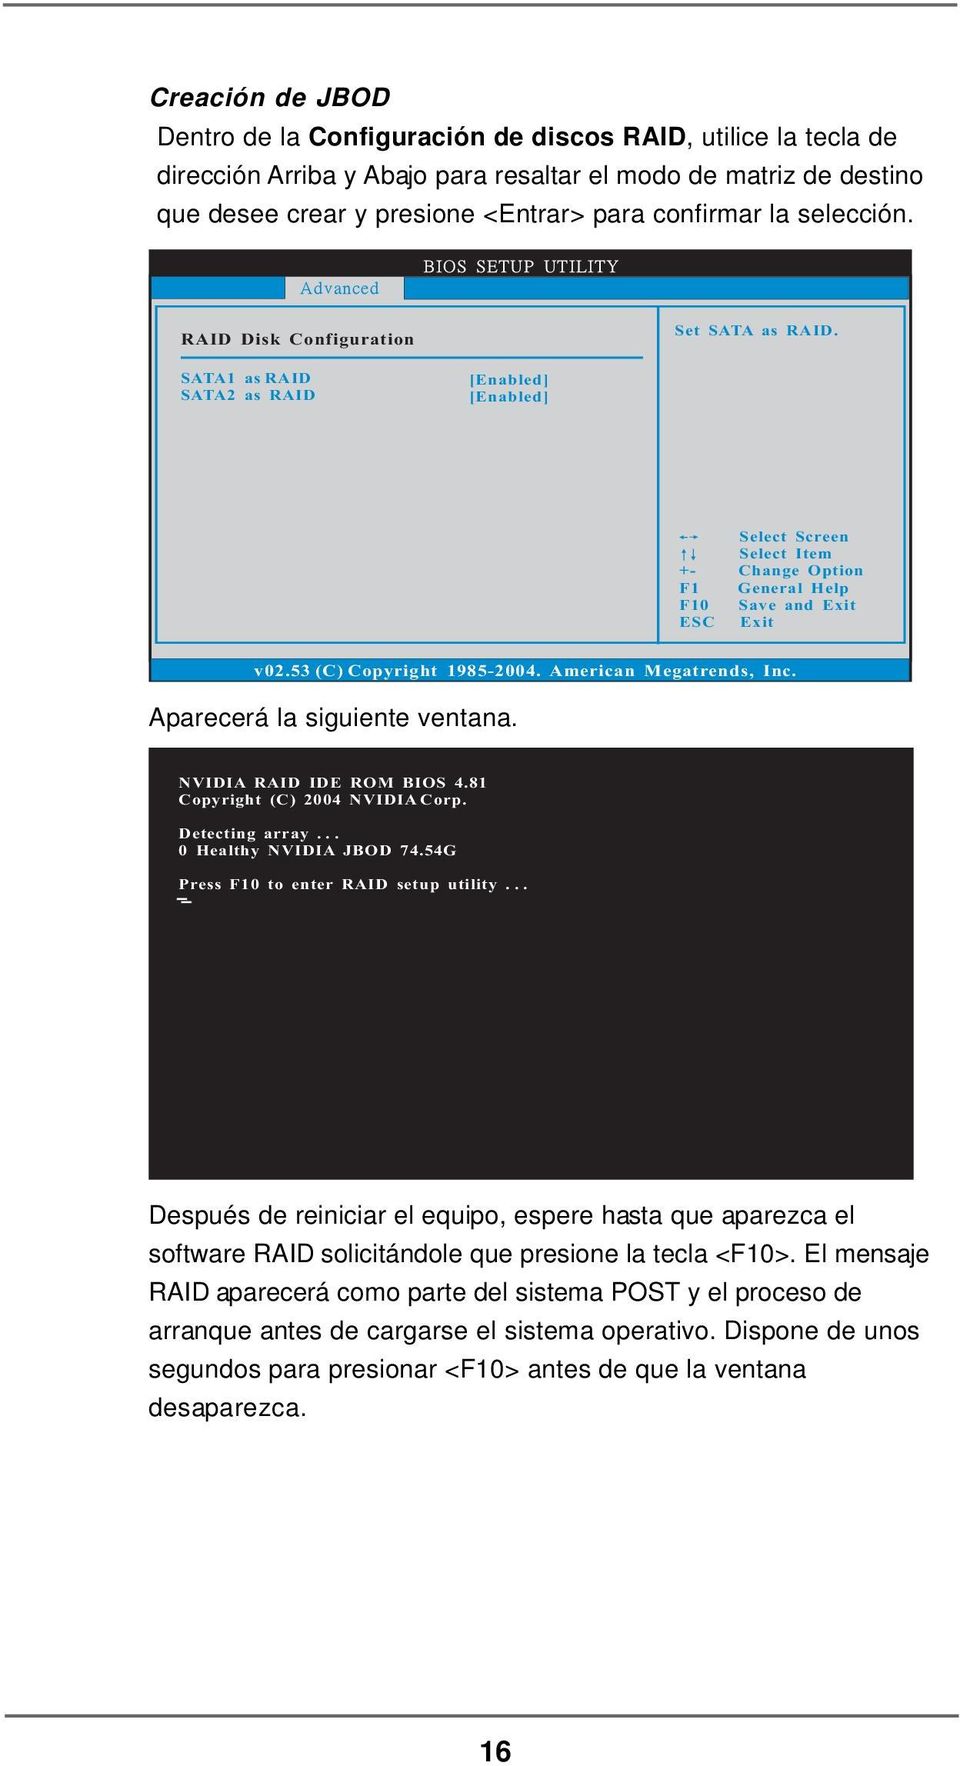 53 (C) Copyright 1985-2004. American Megatrends, Inc. Aparecerá la siguiente ventana. NVIDIA RAID IDE ROM BIOS 4.81 Copyright (C) 2004 NVIDIA Corp. Detecting array... 0 Healthy NVIDIA JBOD 74.